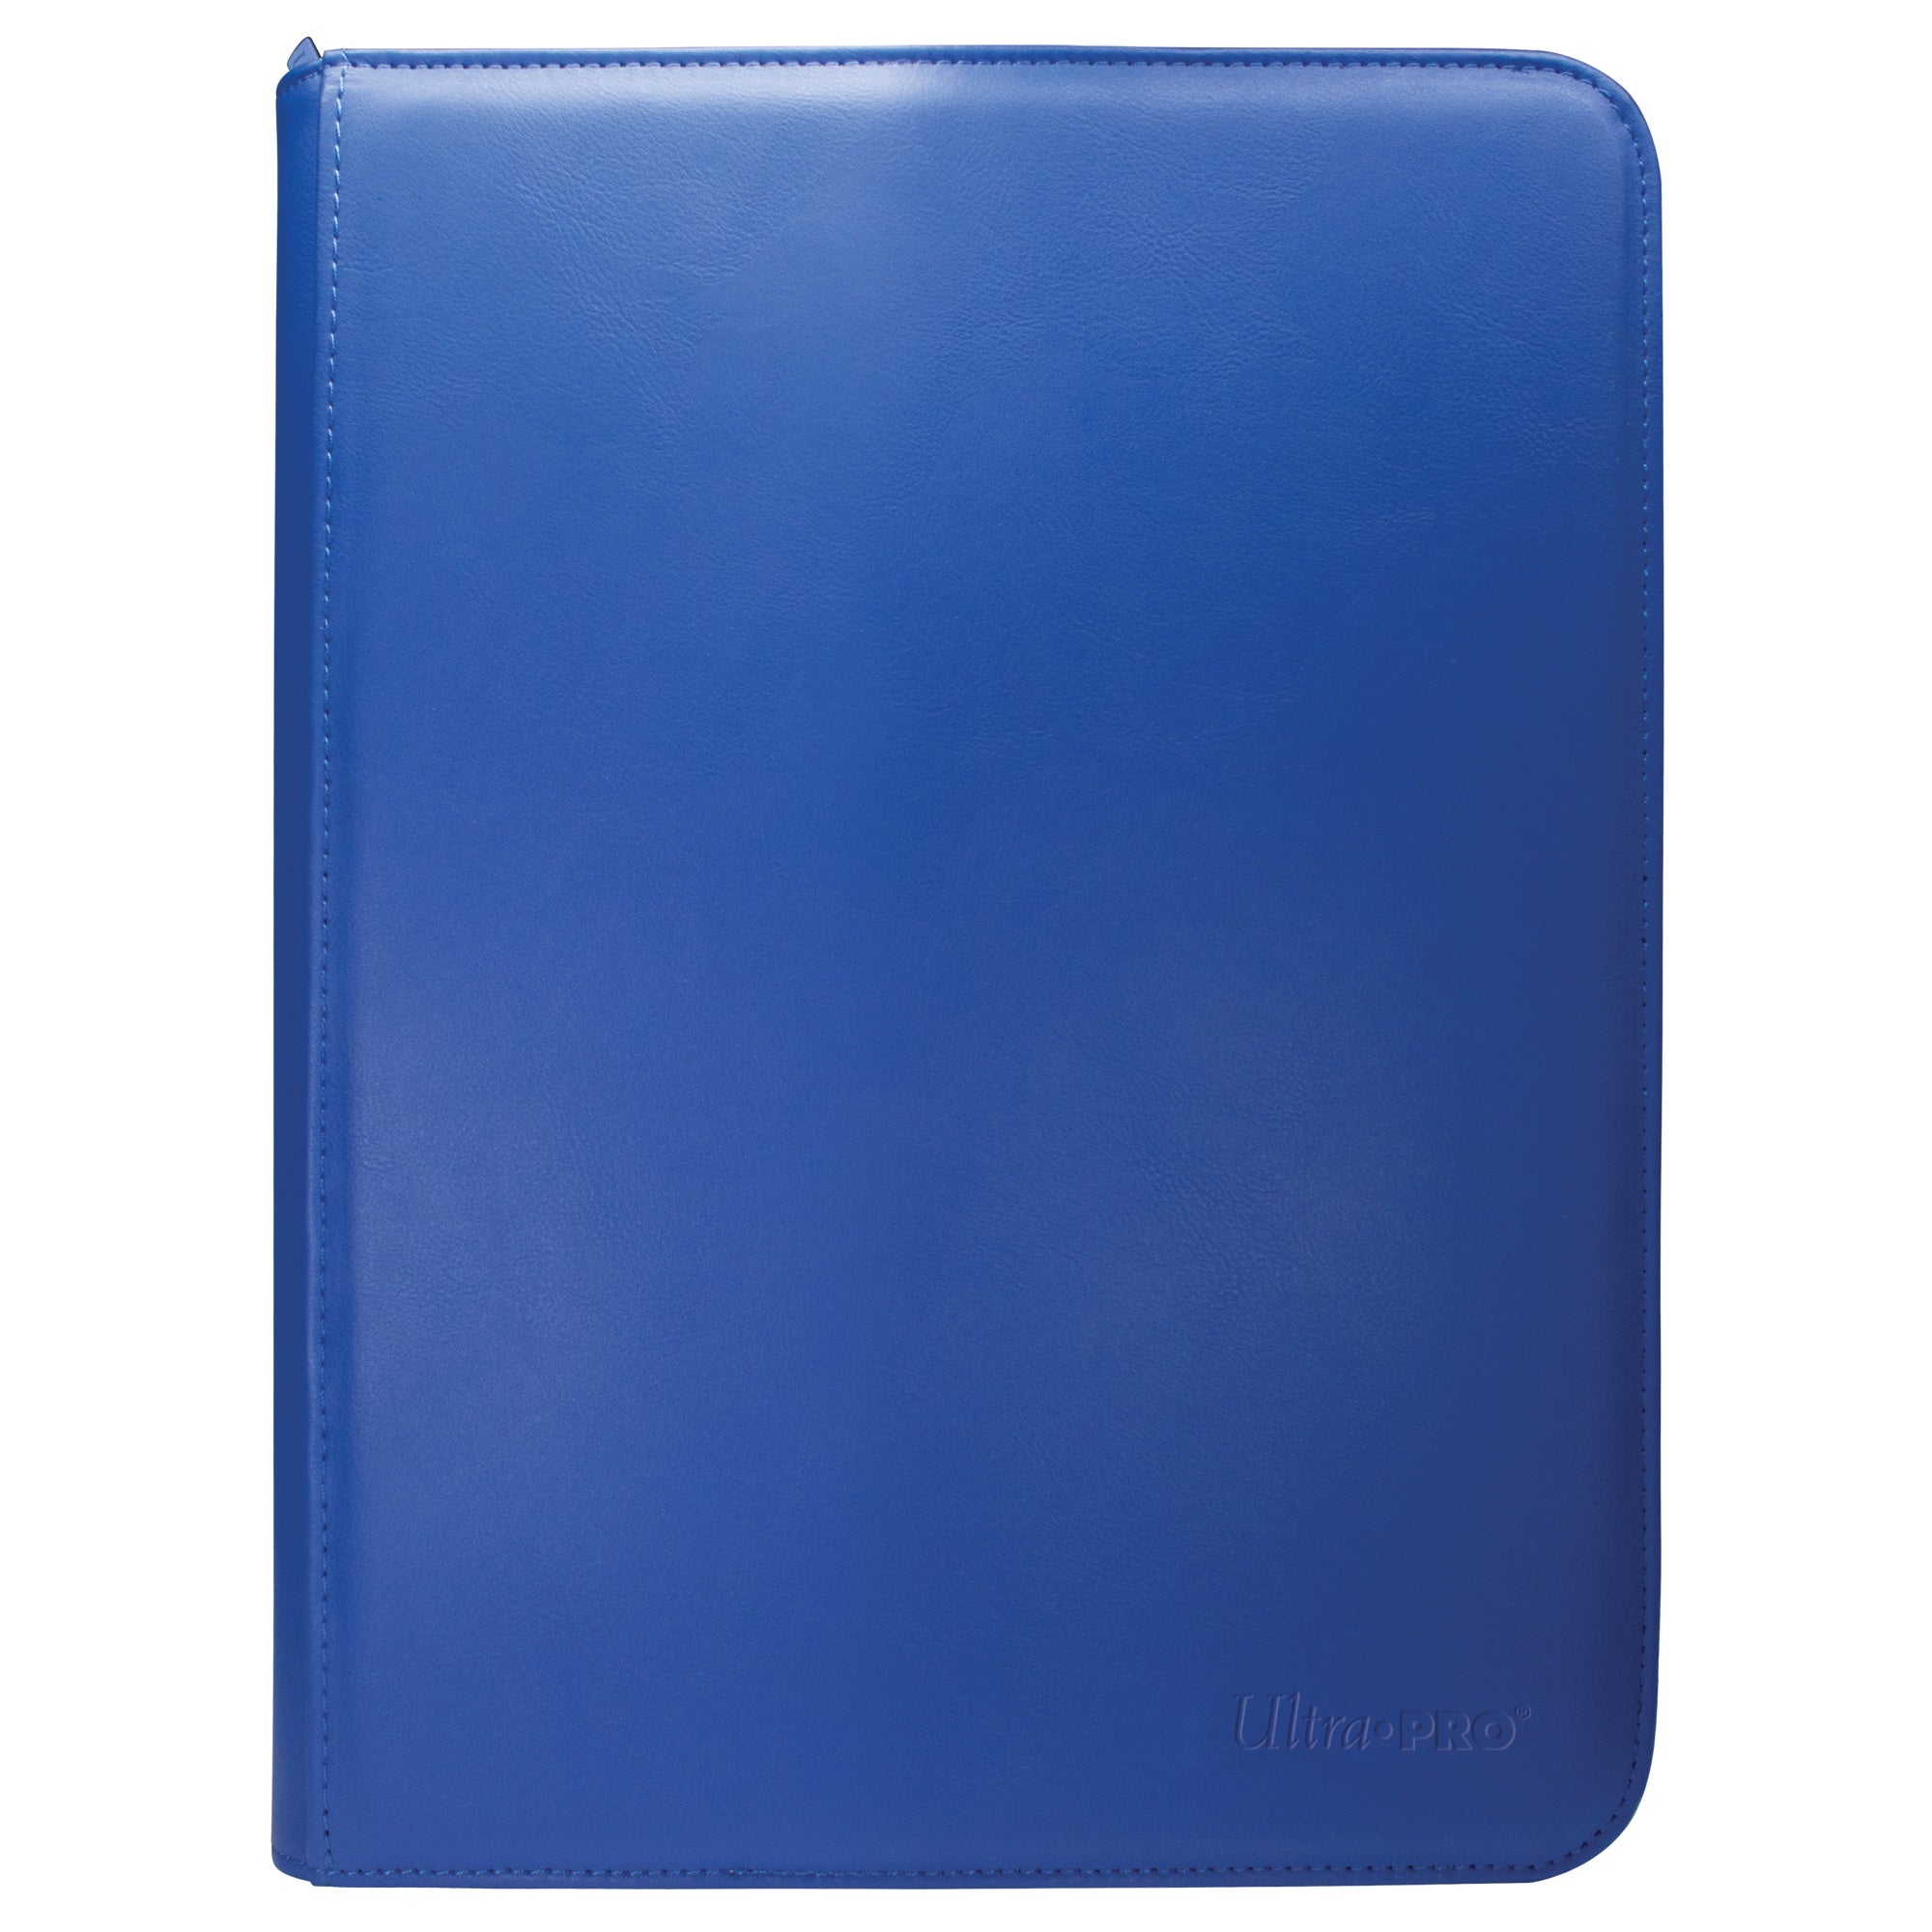 Ultra Pro - 9-Pocket Vivid Zippered Pro-Binder - Blue